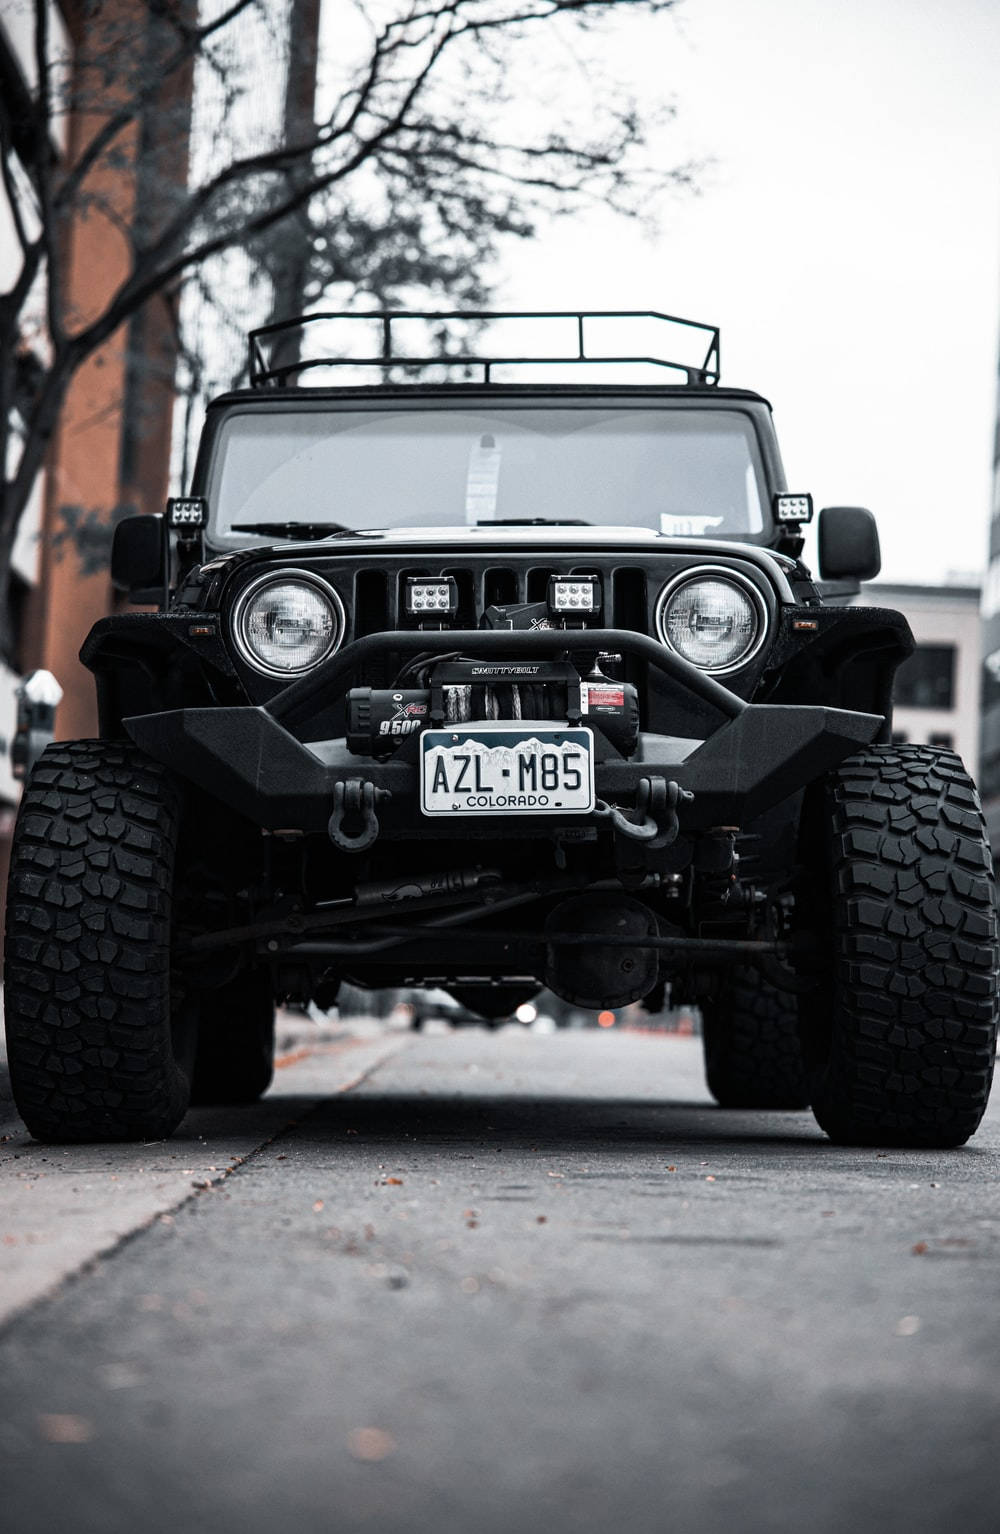 Black Jeep Wrangler With Huge Tires